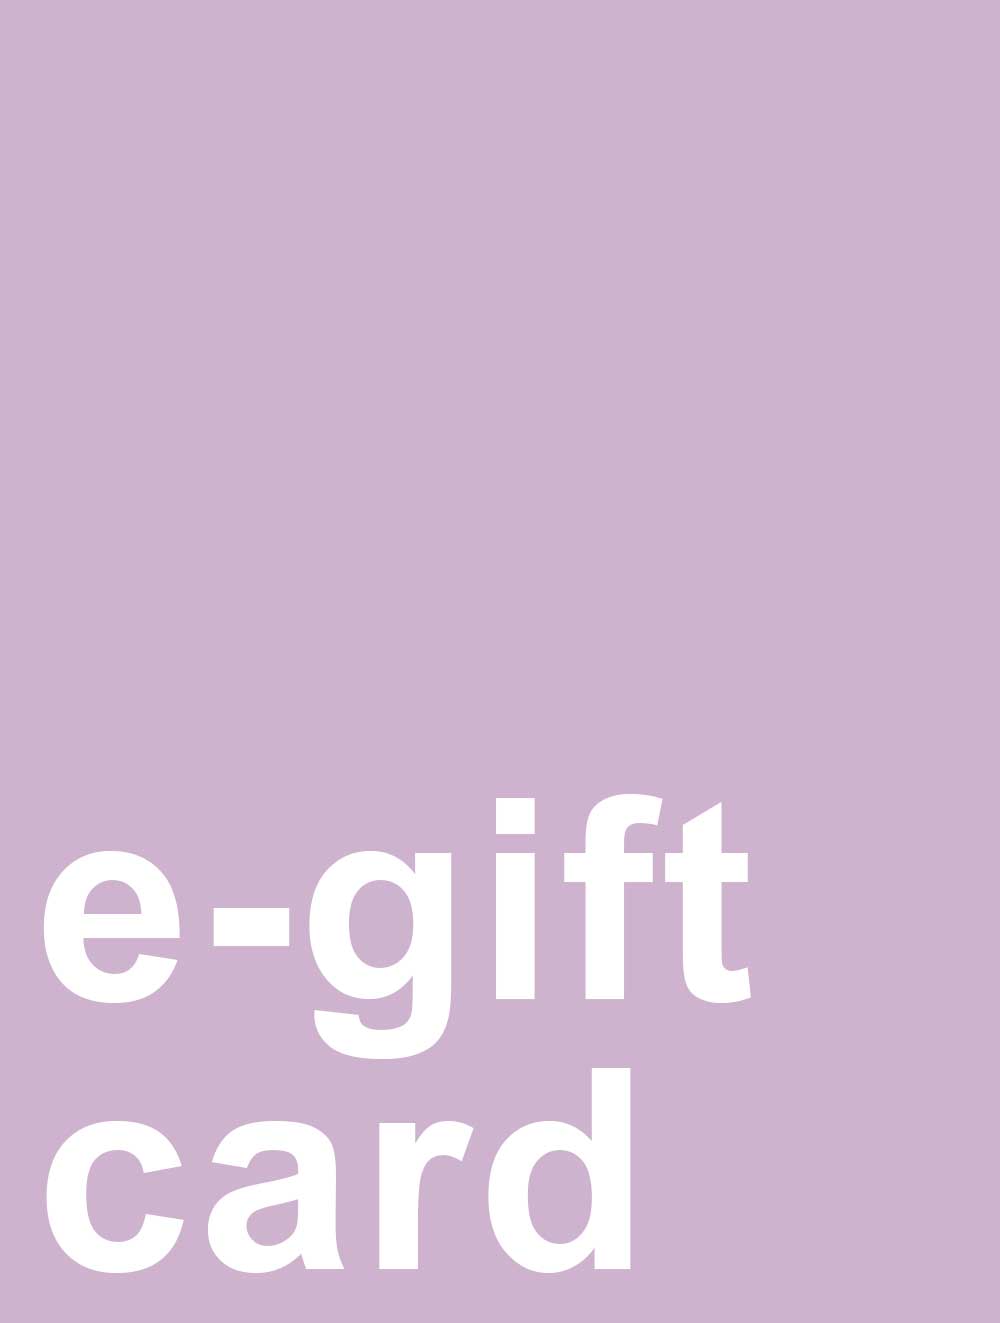 gift-card